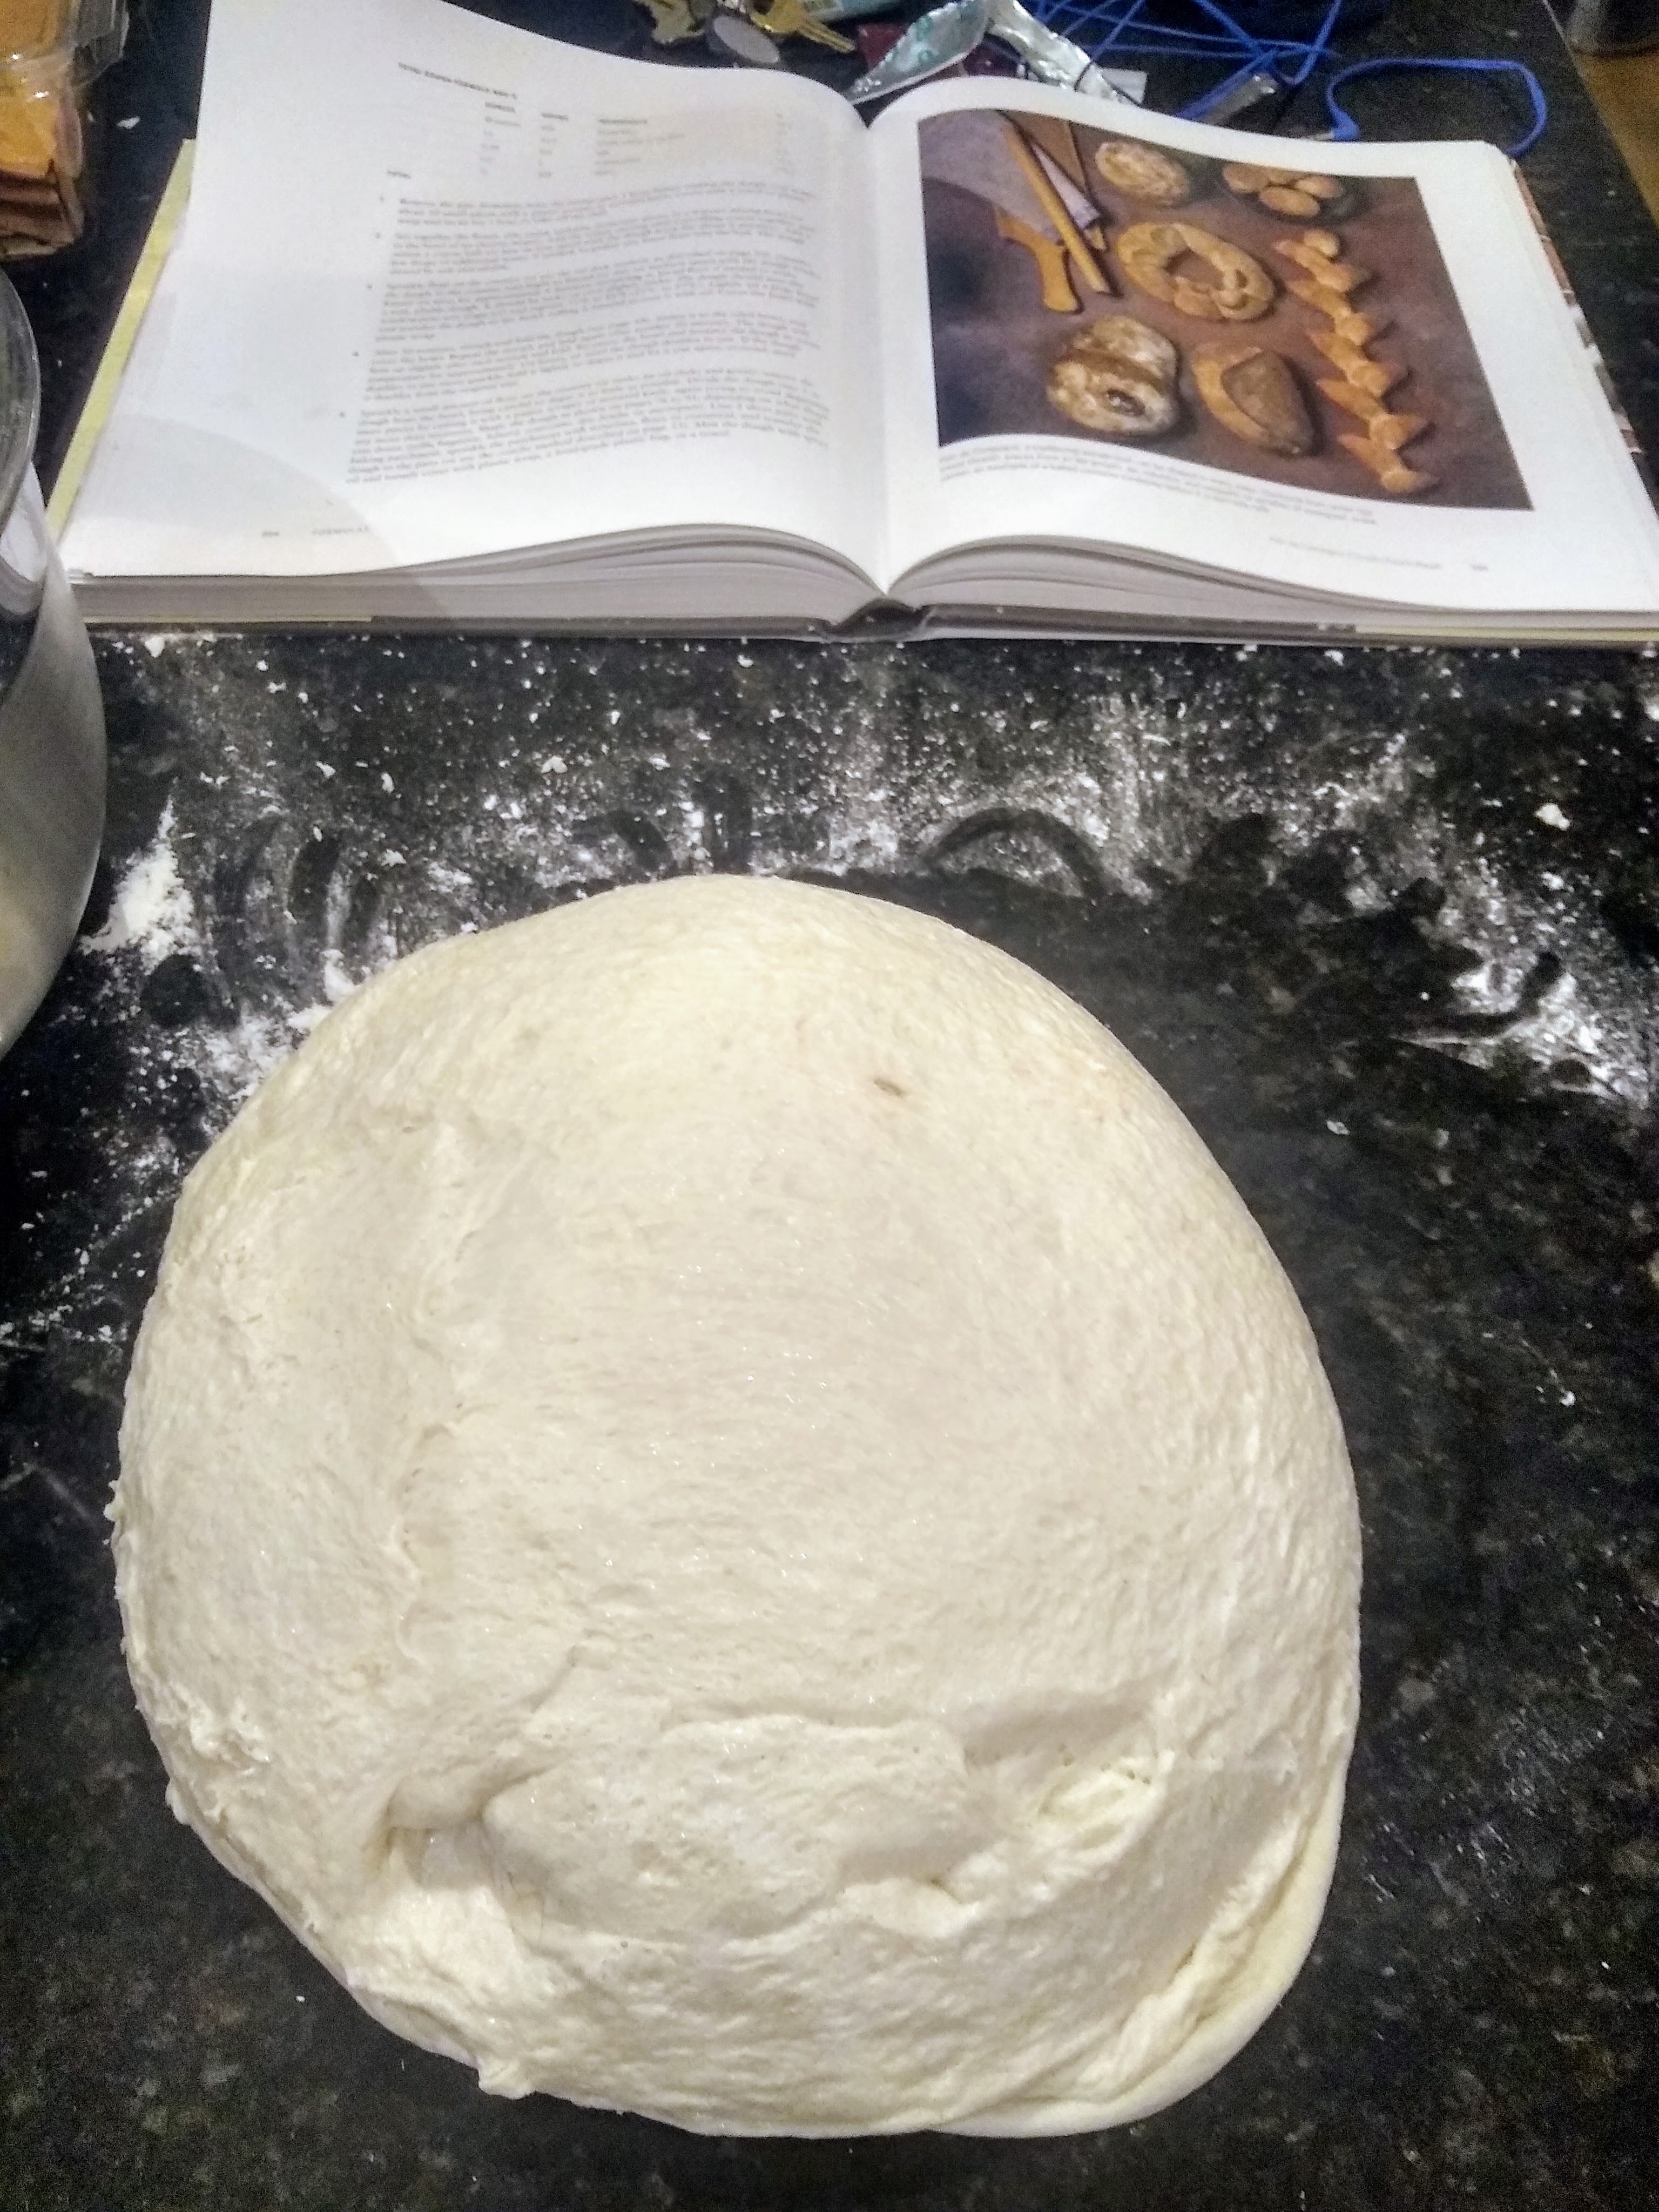 A large amount of lean dough.